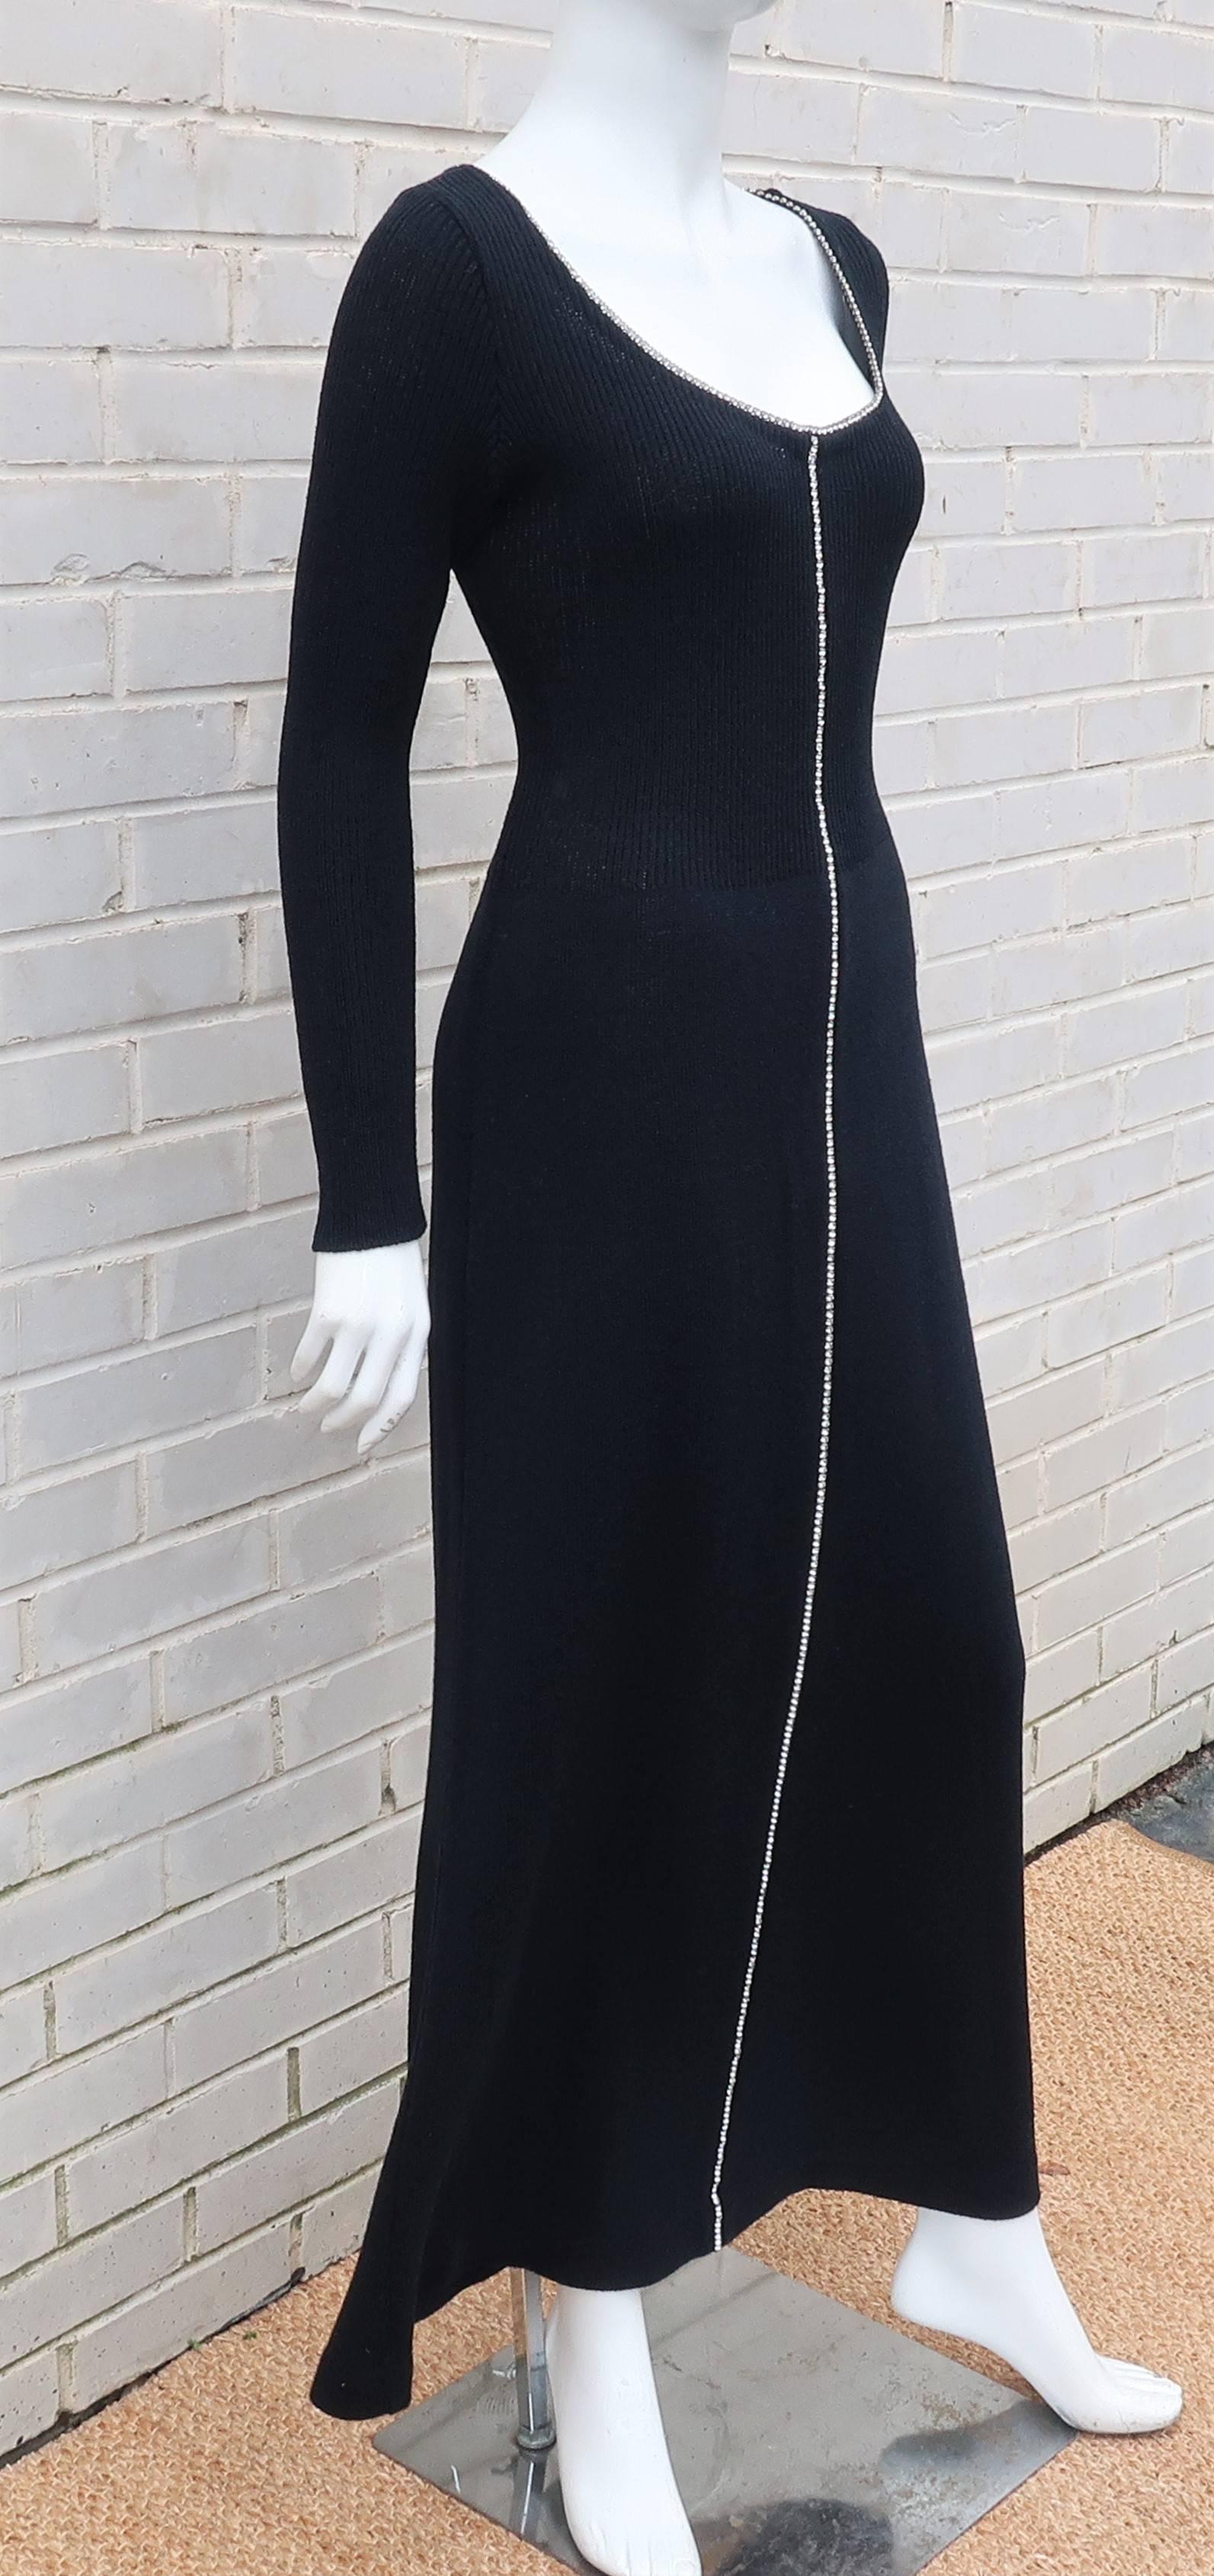 Women's 1970’s Silhouette Black Knit Dress With Rhinestones